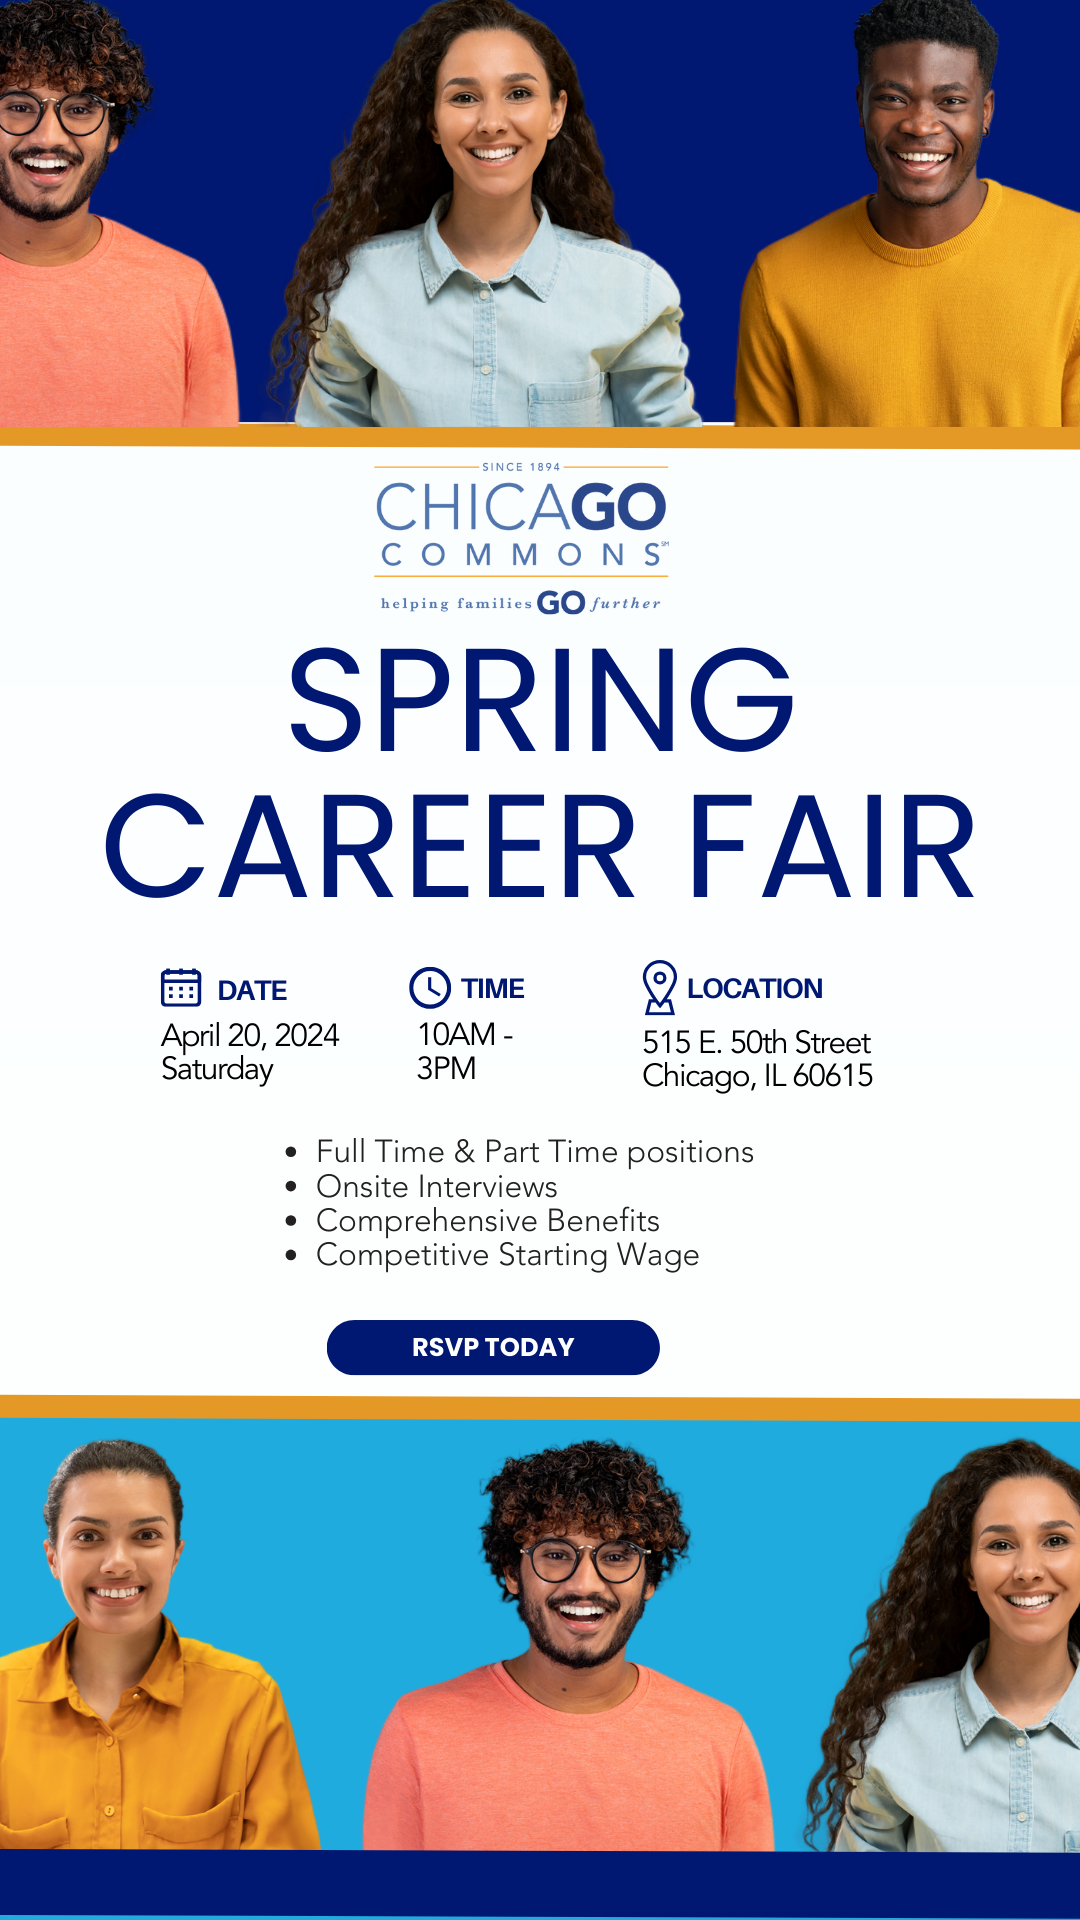 Chicago Commons Spring Career Fair 2024 Hiring Employment Jobs